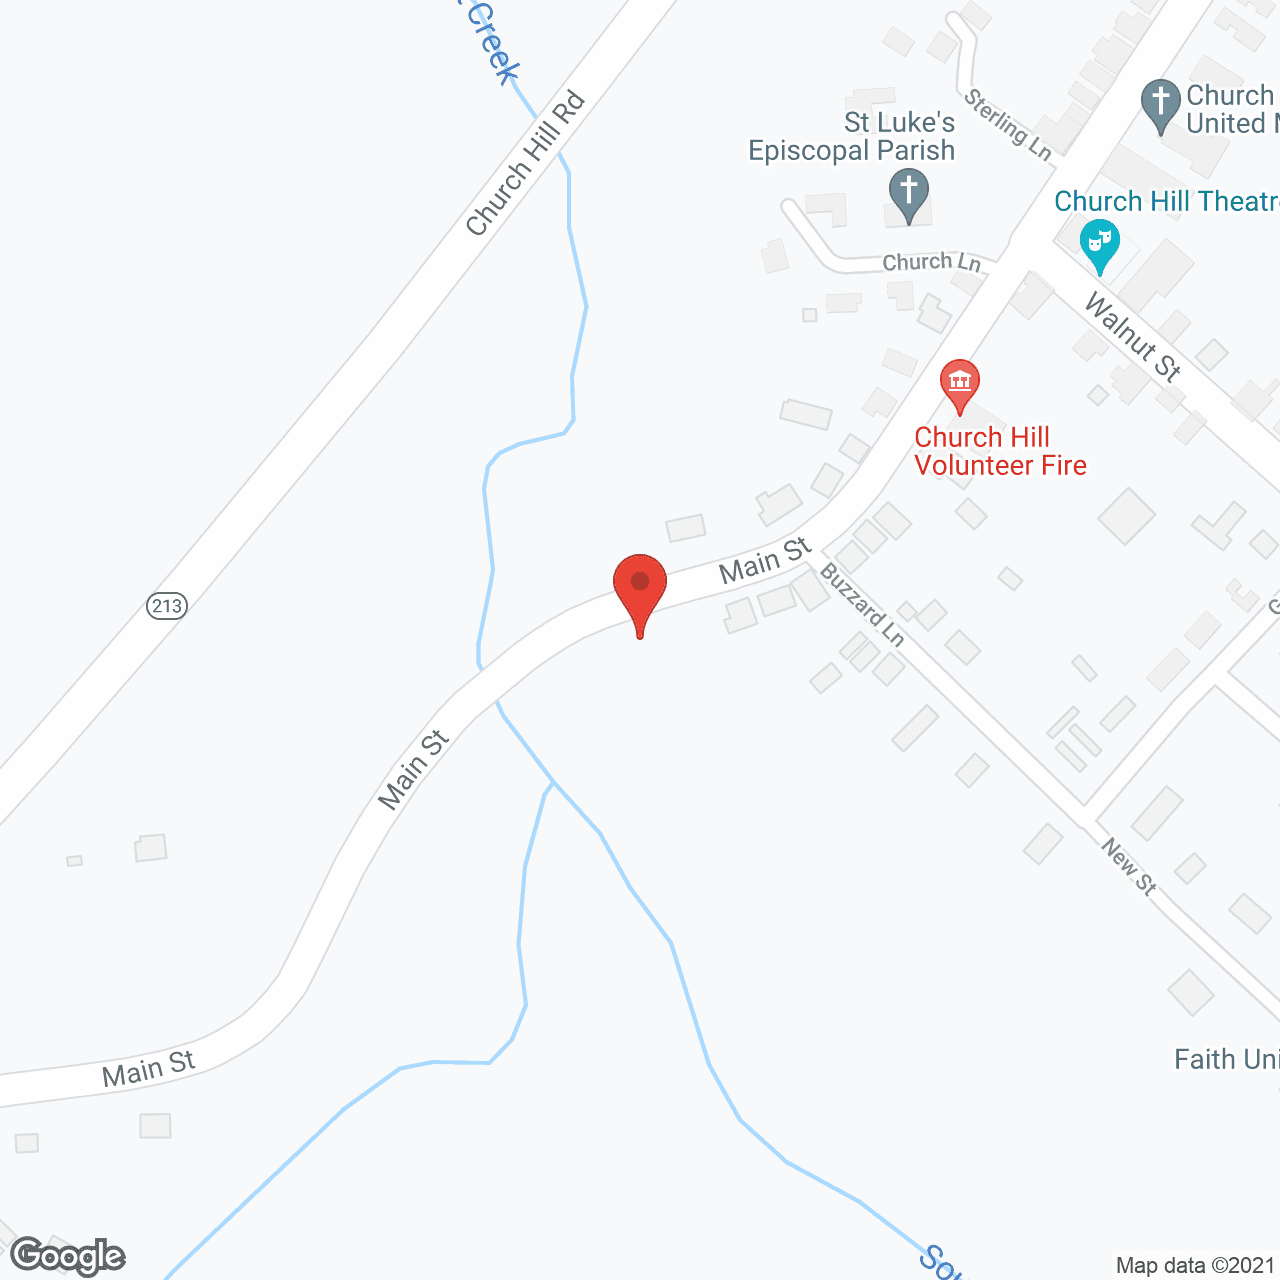 Schuyler House in google map